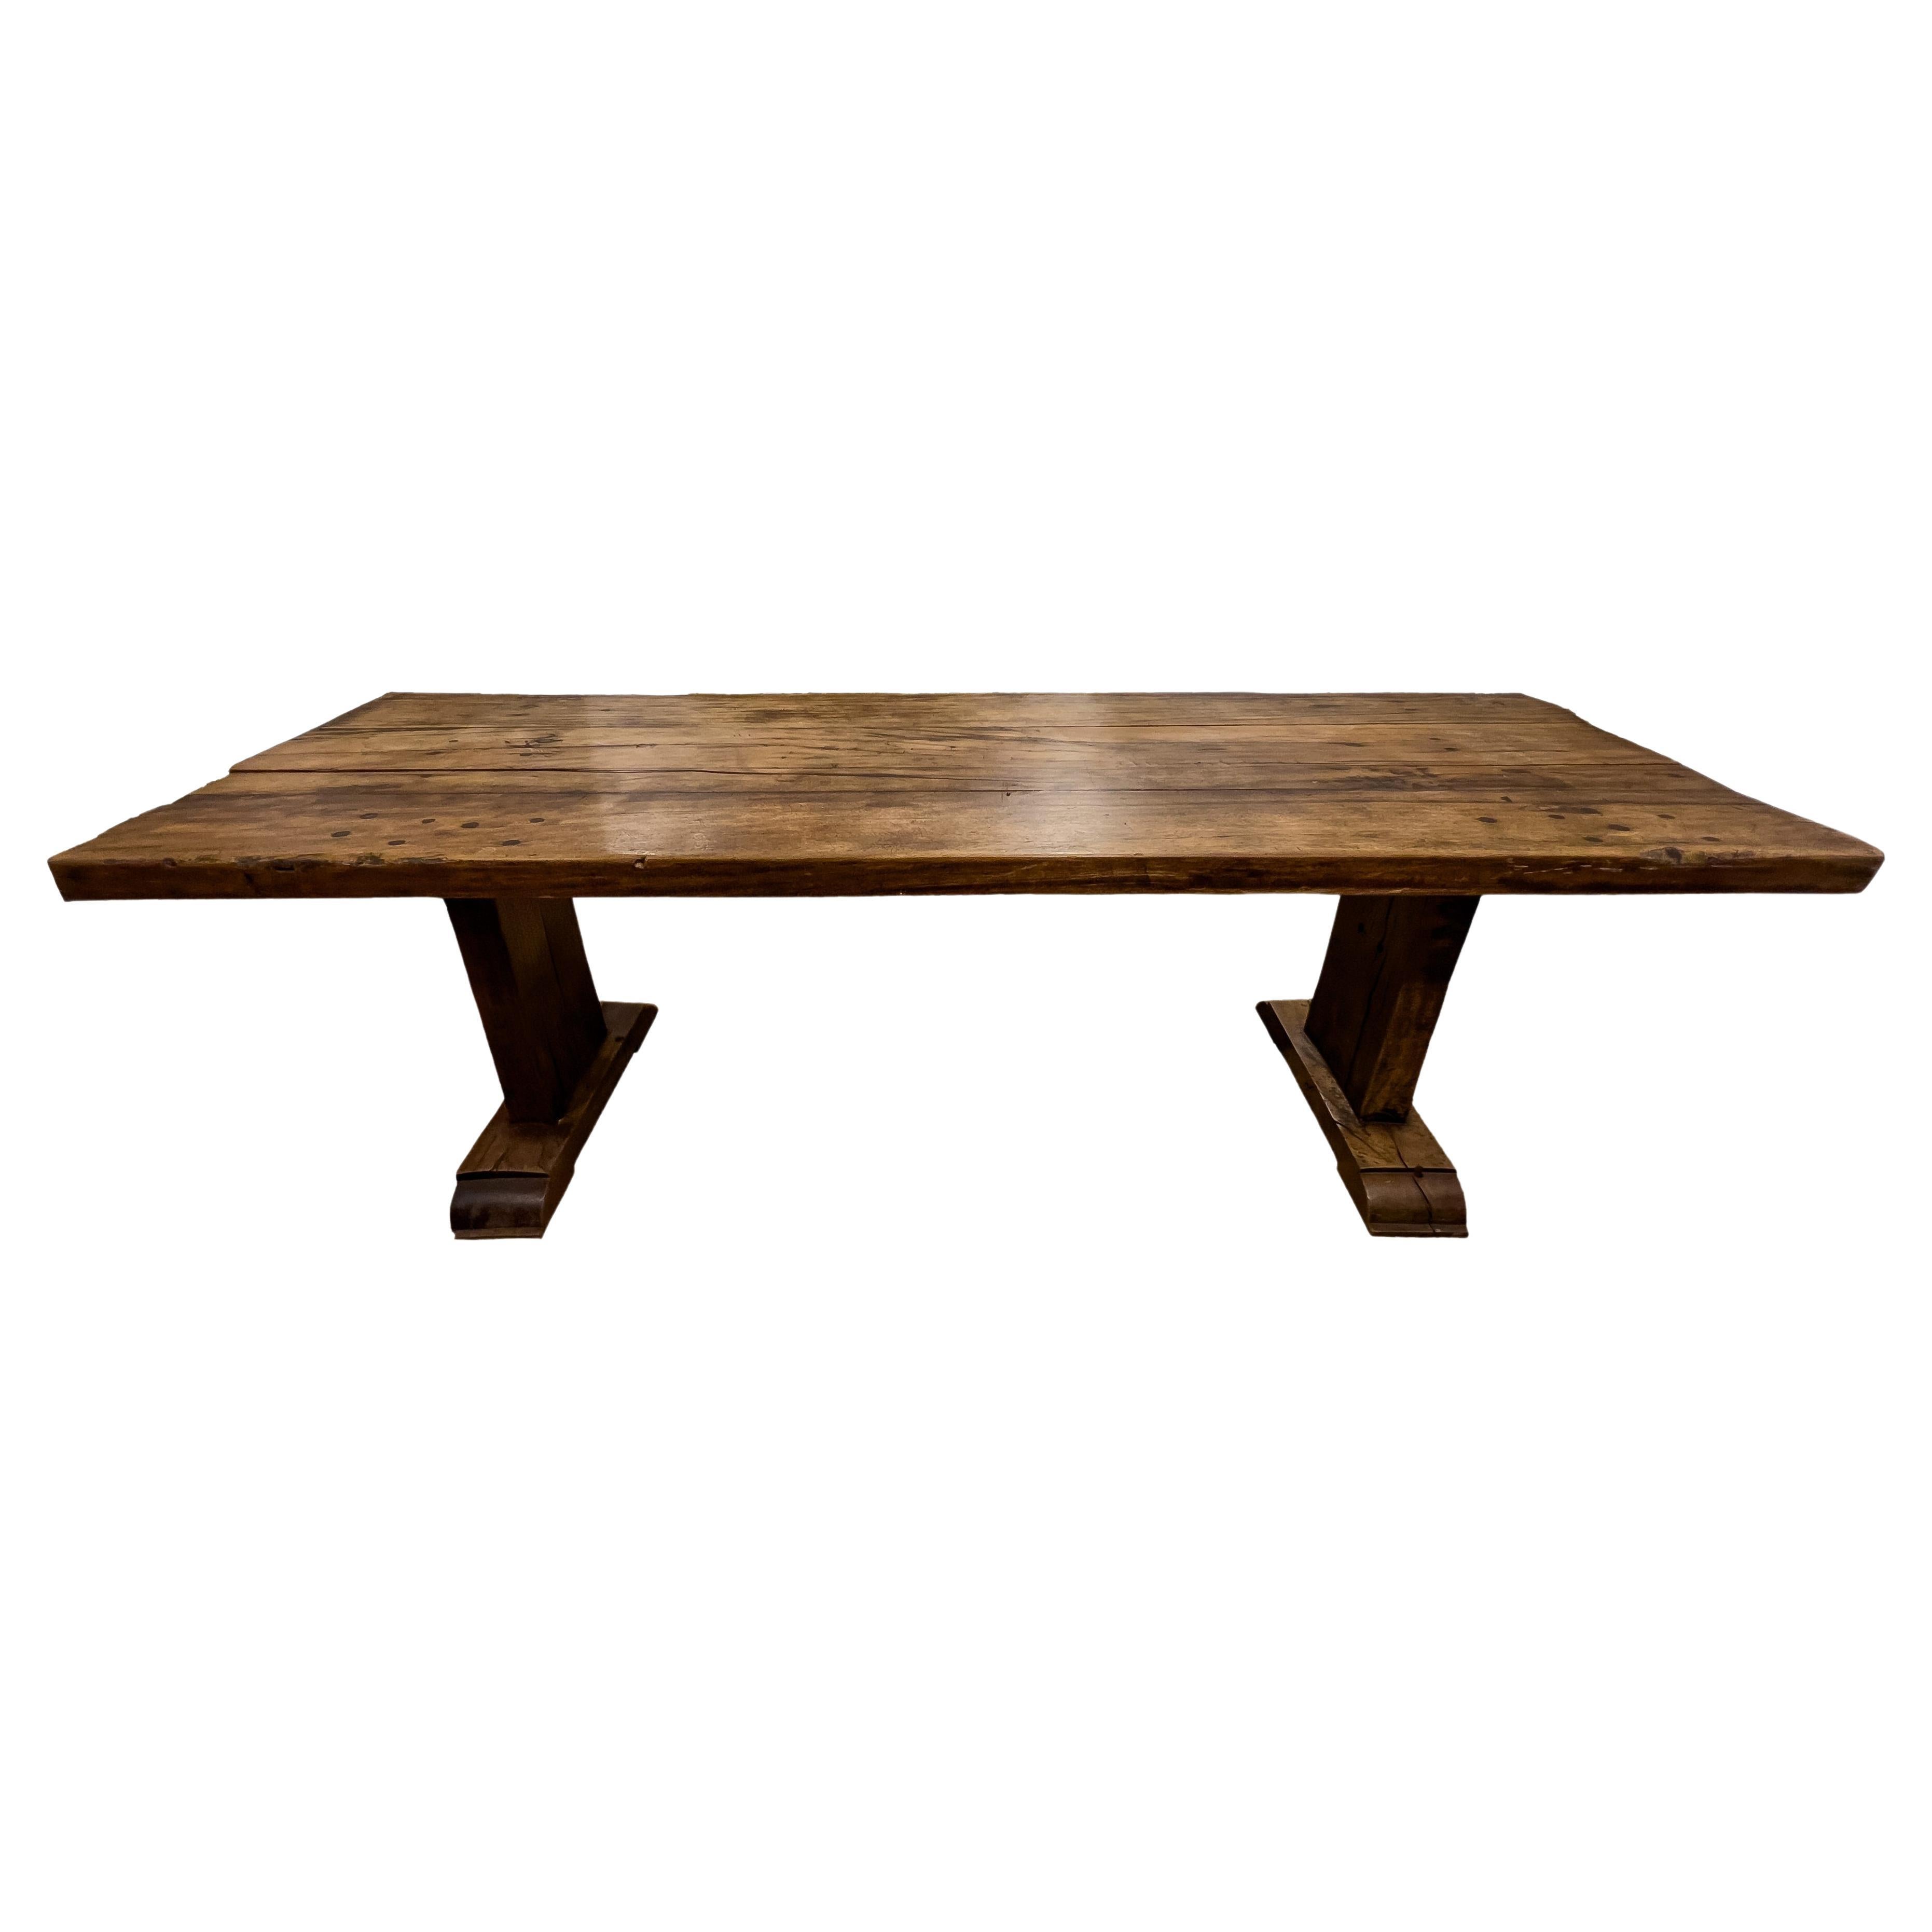 18th c. Italian Fruitwood Table